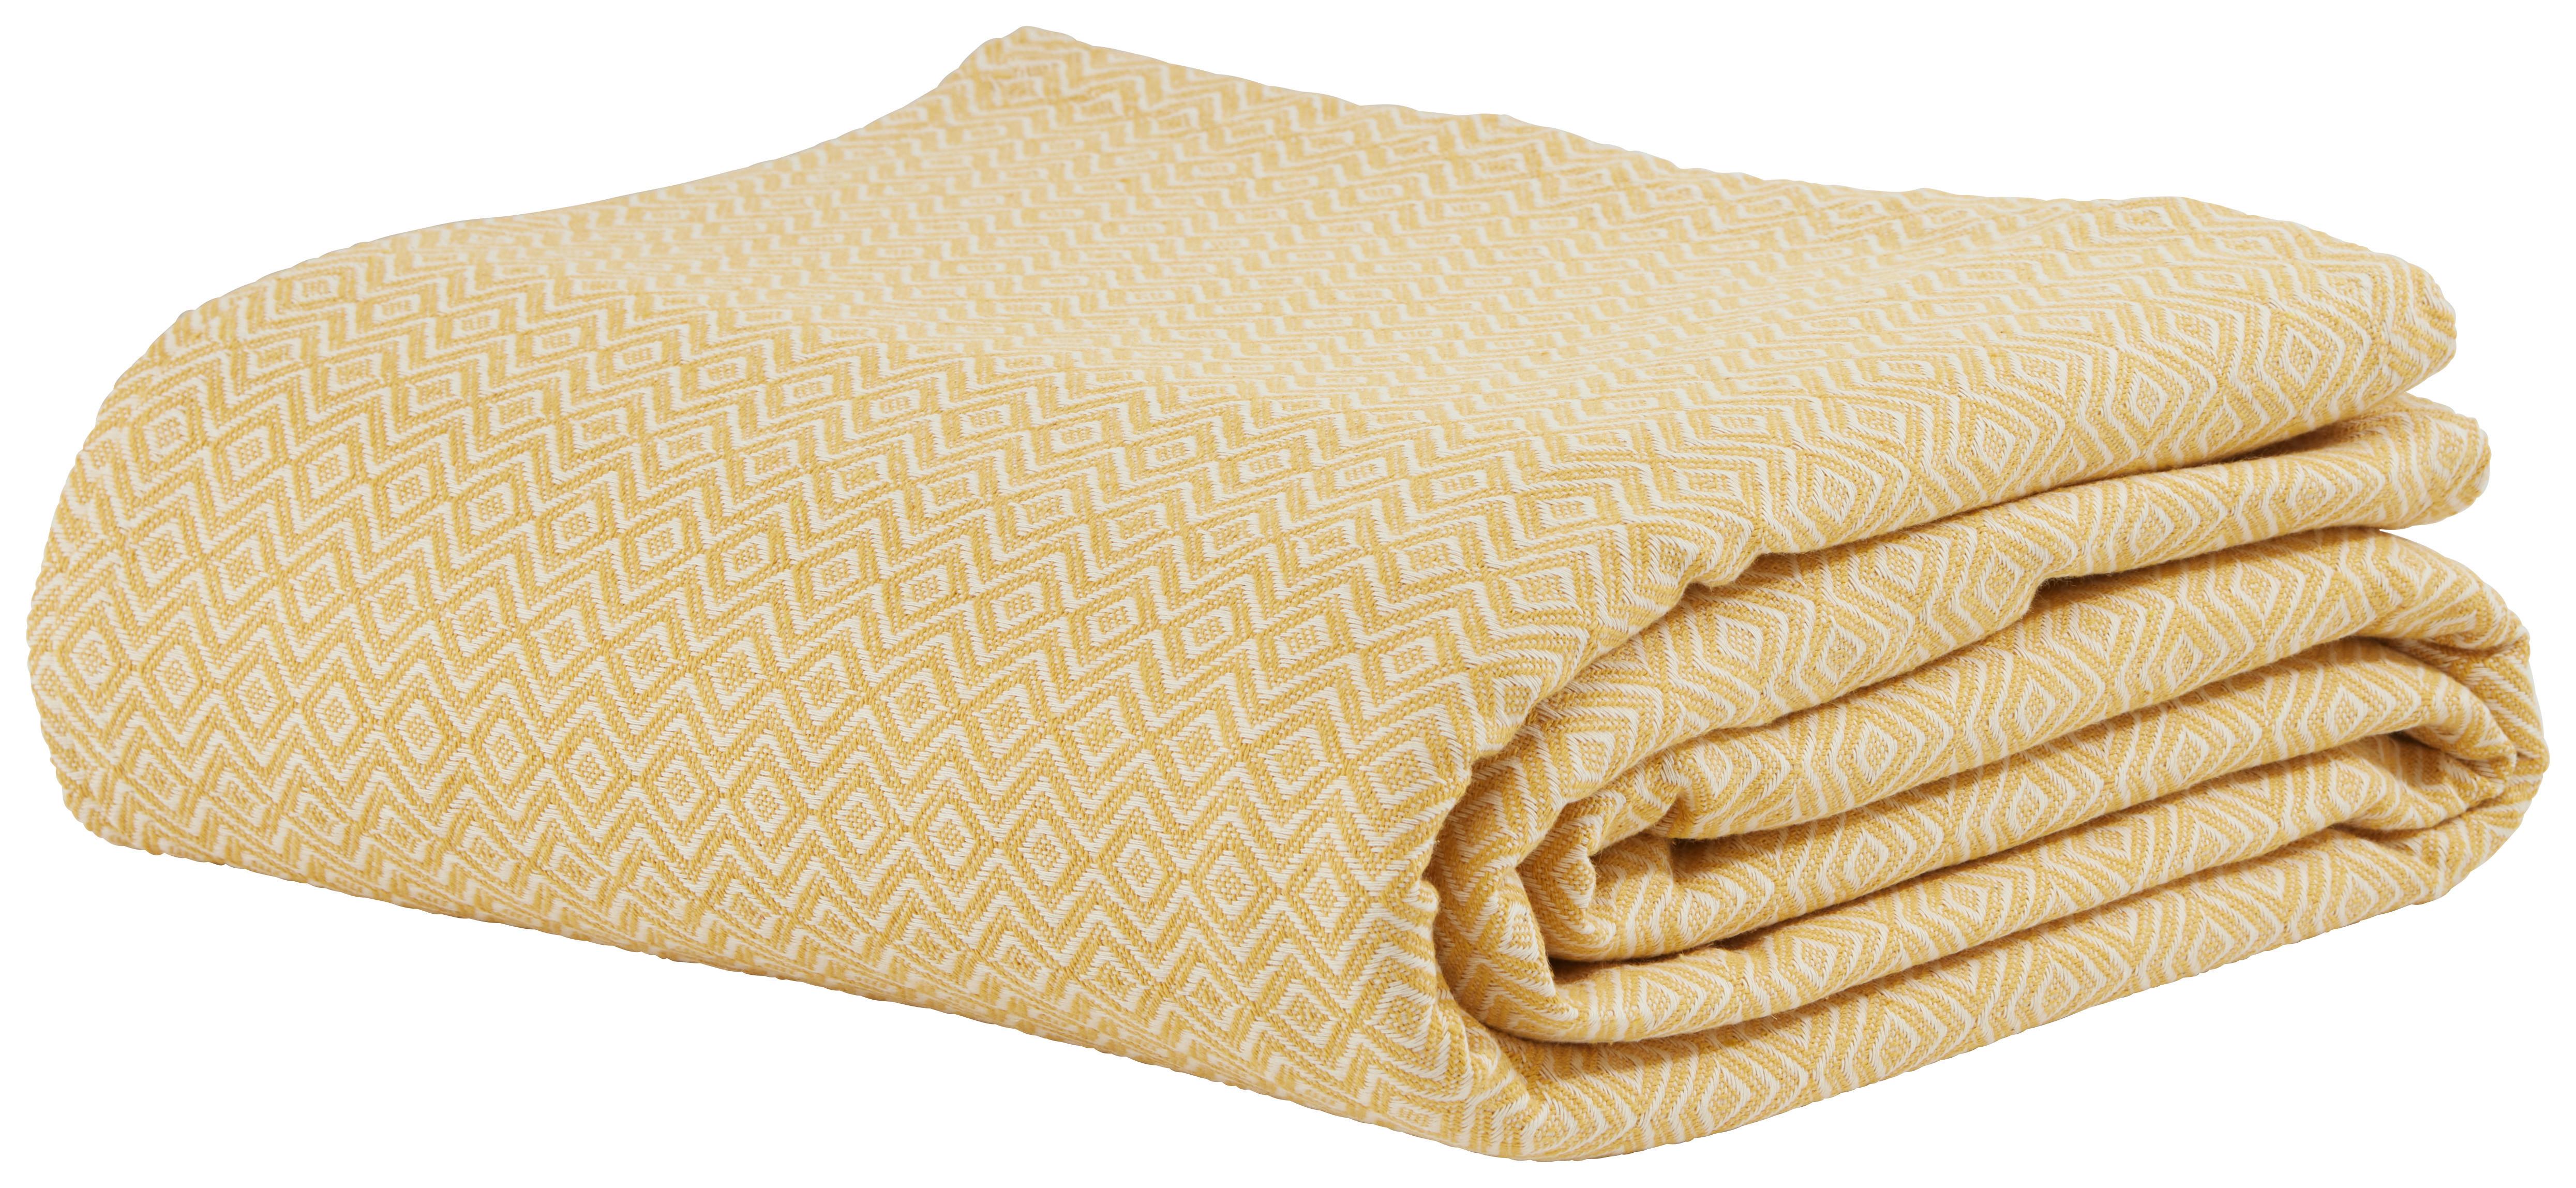 PREKRIVAČ DOBBY RAUTE -EXT- - bijela/žuta, tekstil (240/210cm) - Premium Living